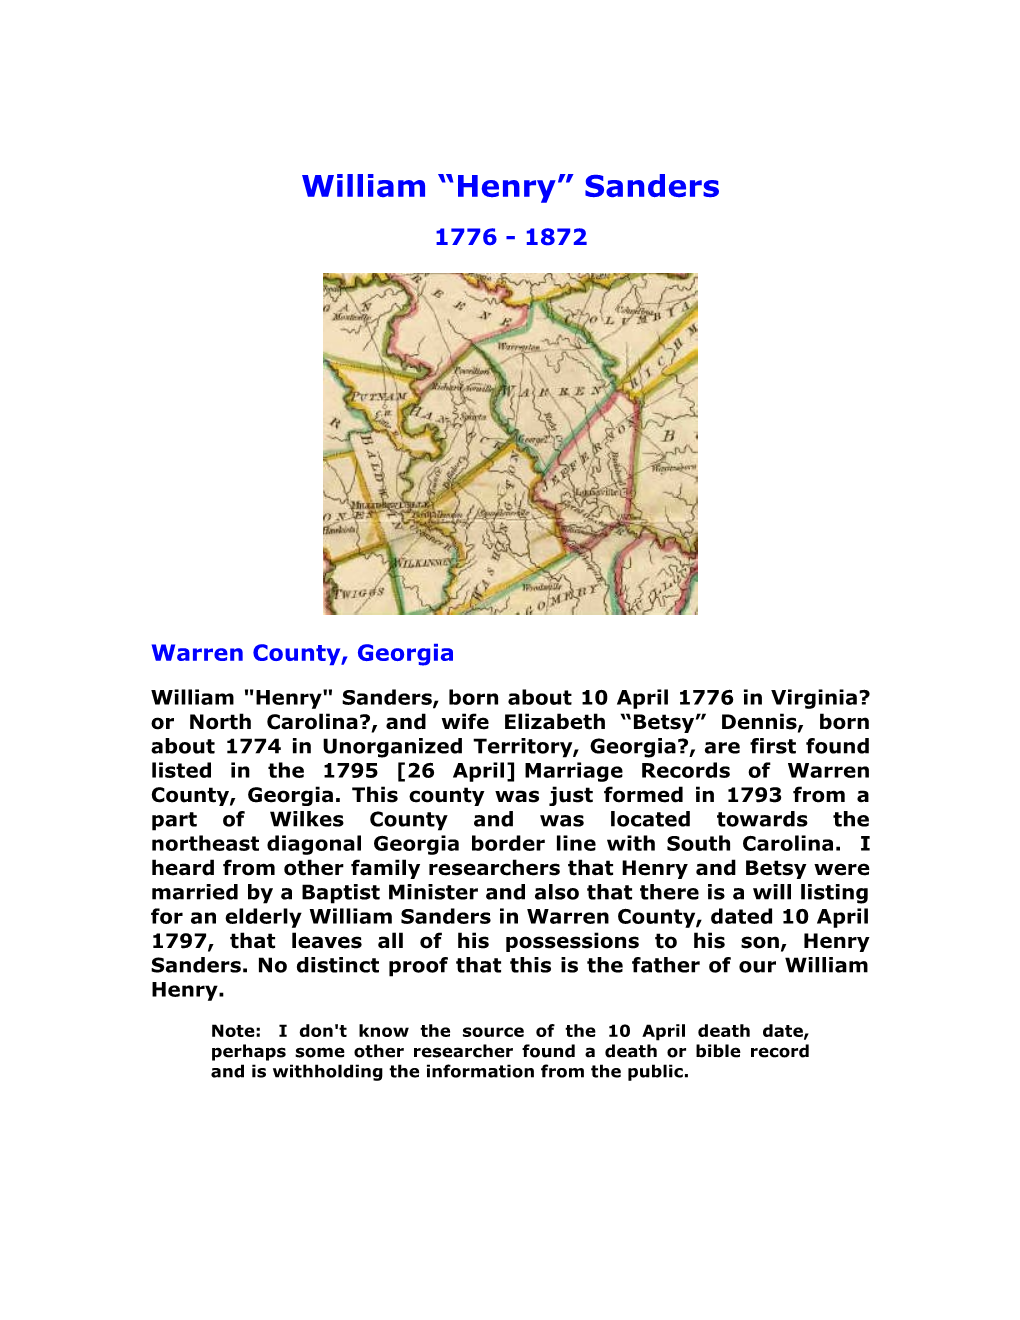 William Henry Sanders